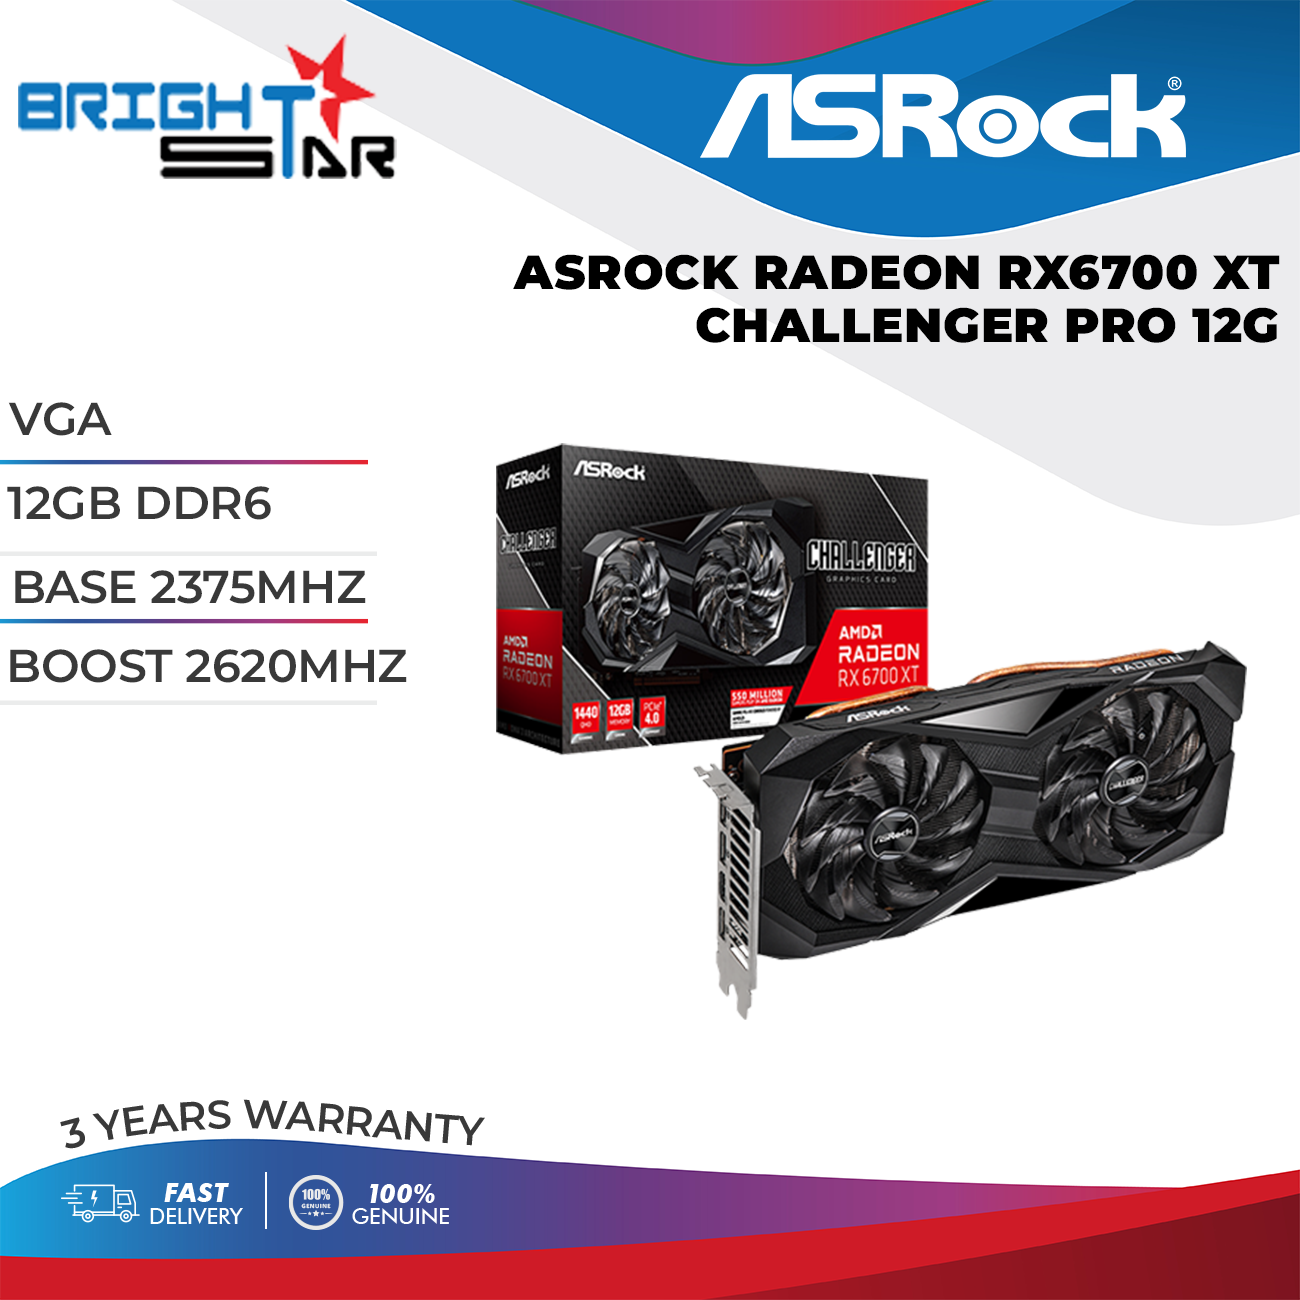 ASROCK Radeon RX6700 XT CHALLENGER PRO 12G Graphic Card